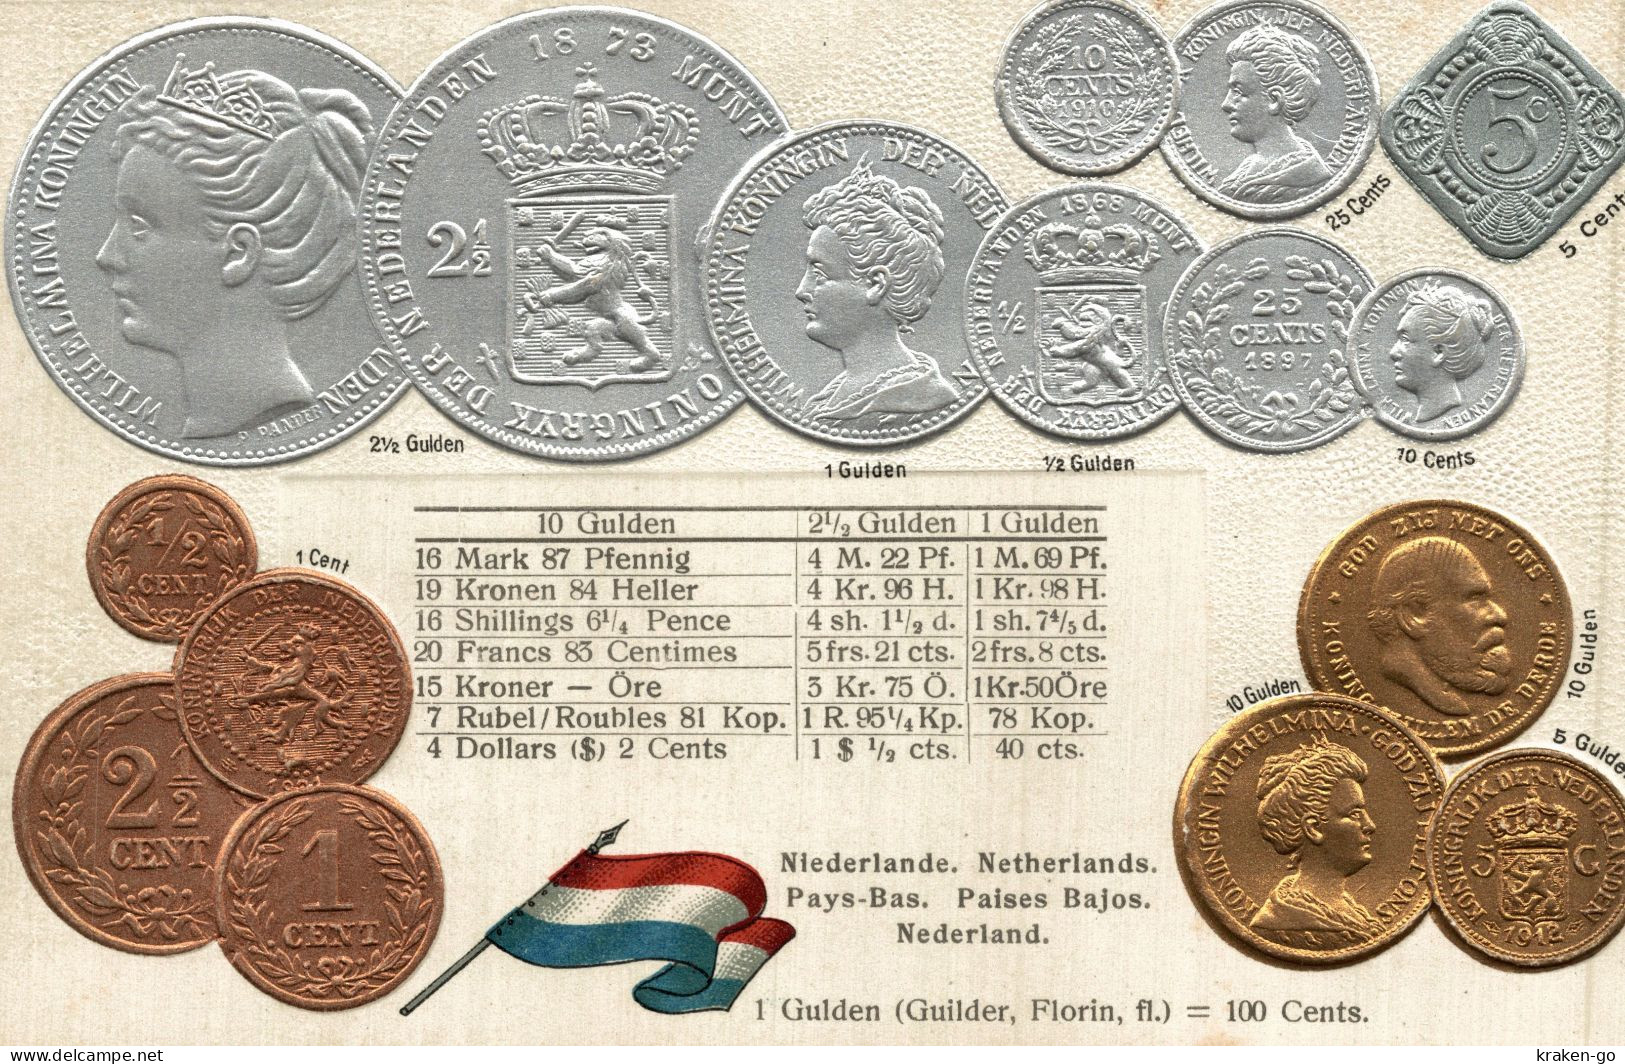 MONETE E BANDIERA Dell'OLANDA - COINS E NATIONAL FLAG Of HOLLAND - #004 - Monnaies (représentations)